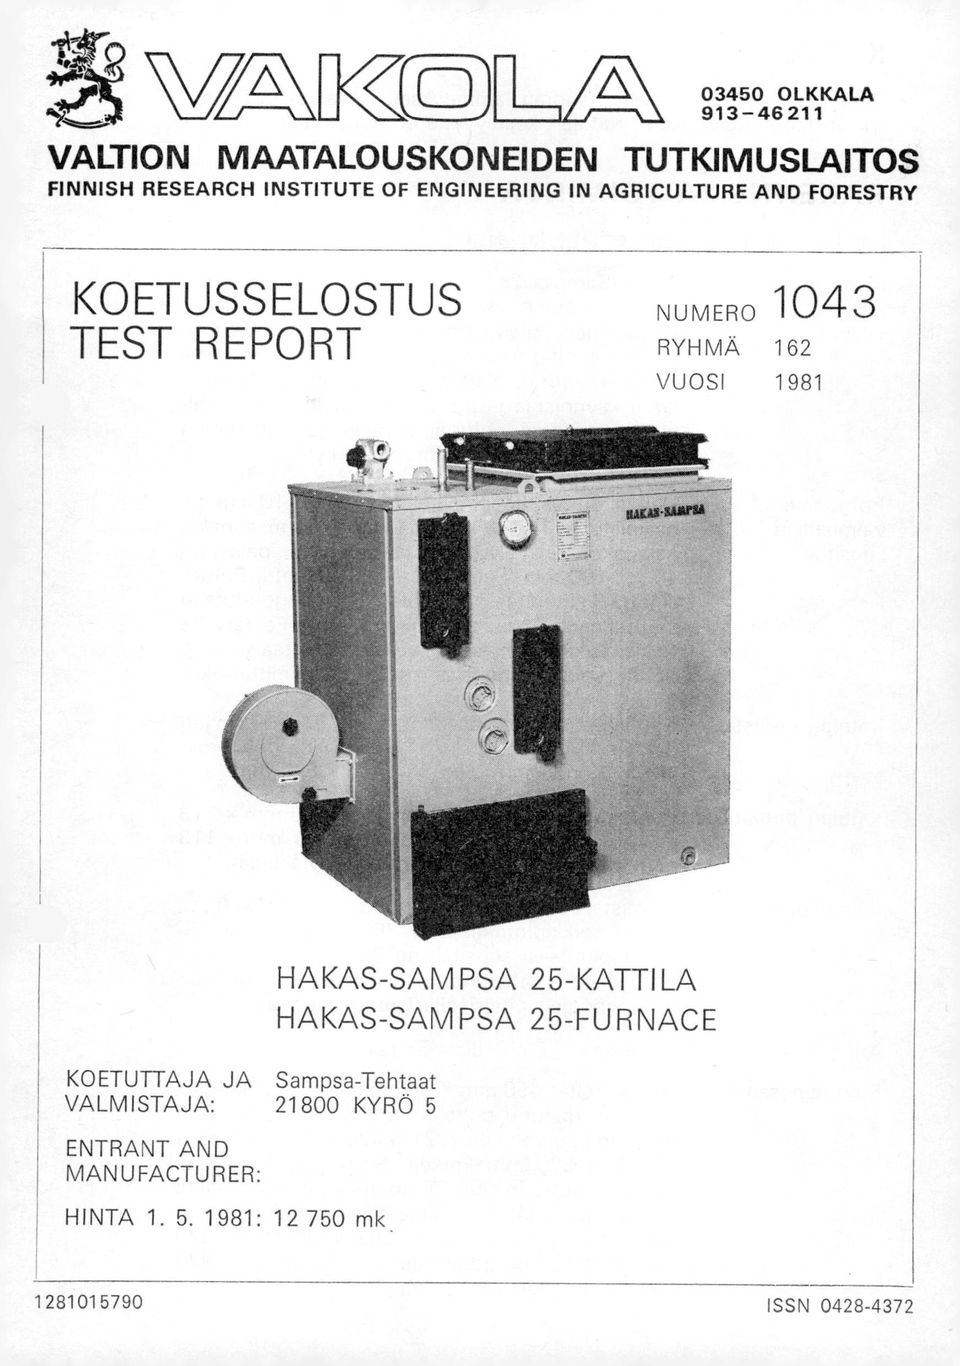 1981 KOETUTTAJA JA Sam psa-tehtaat VALMISTAJA: 21800 KYRÖ 5 ENTRANT AND MANUFACTURER: HINTA 1.